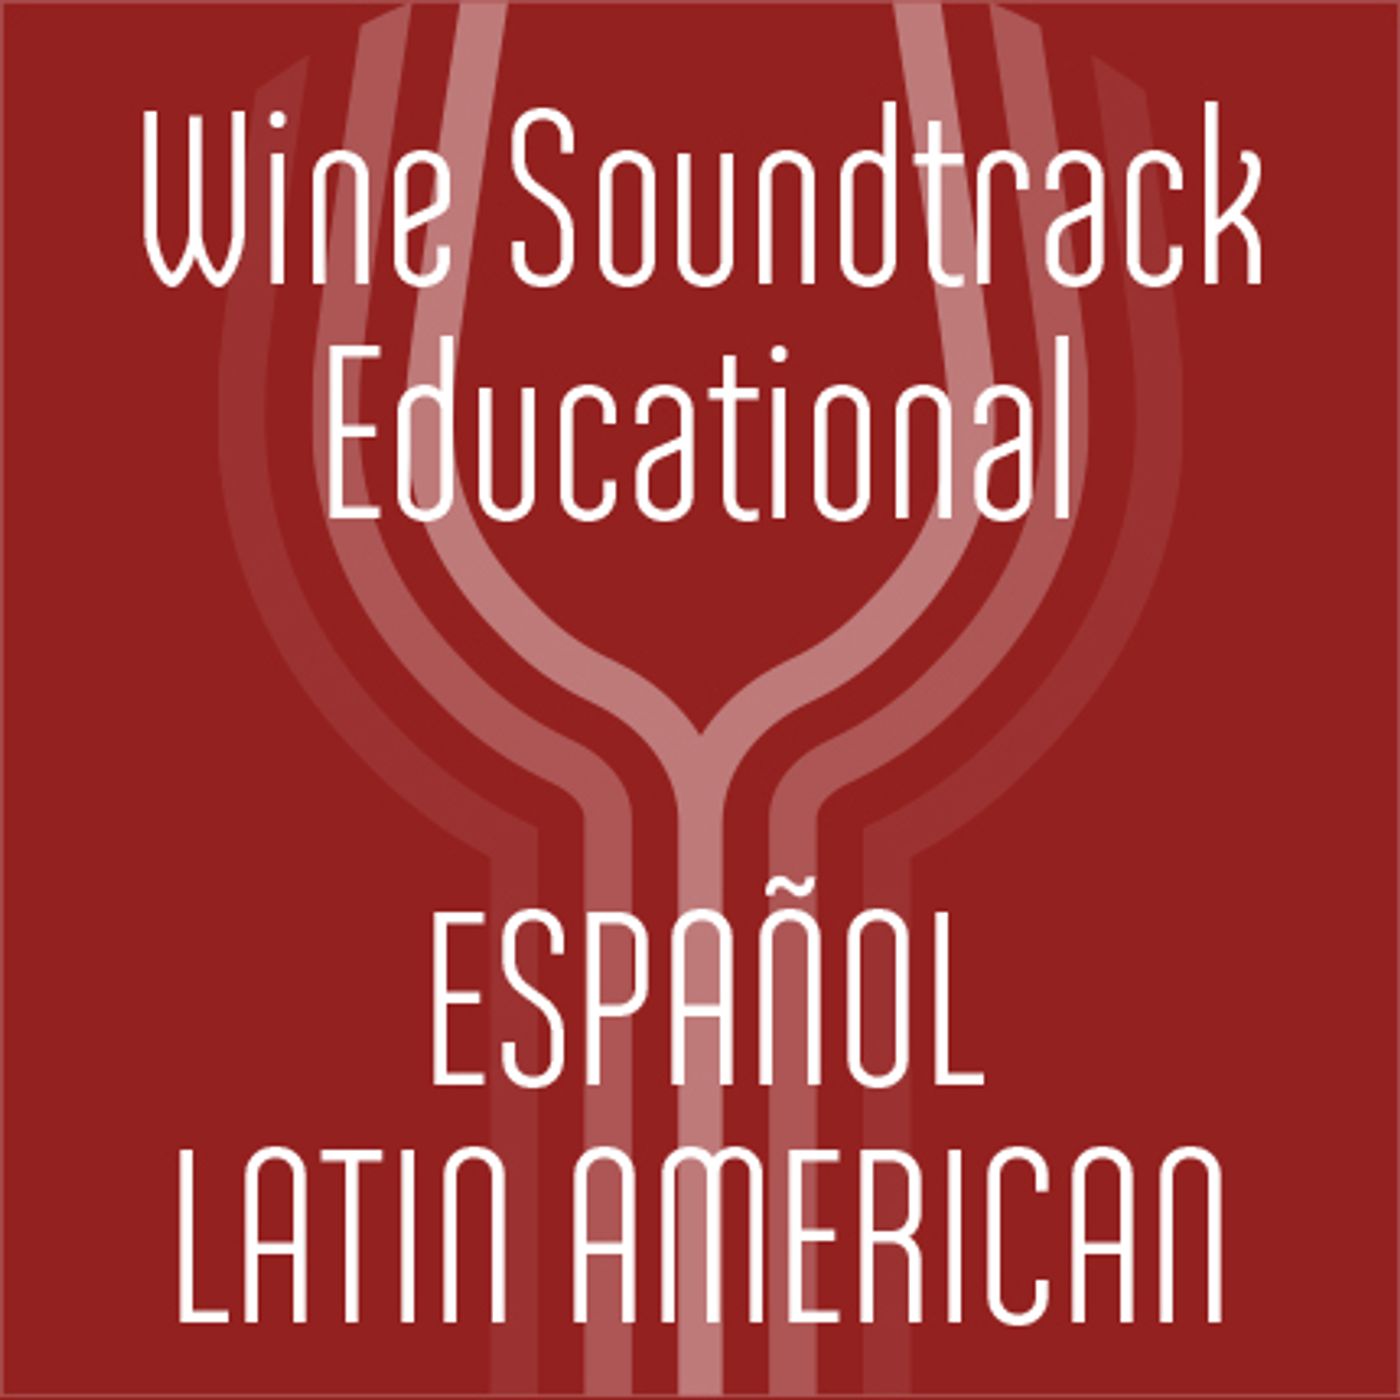 WST Educational - Español Latin American